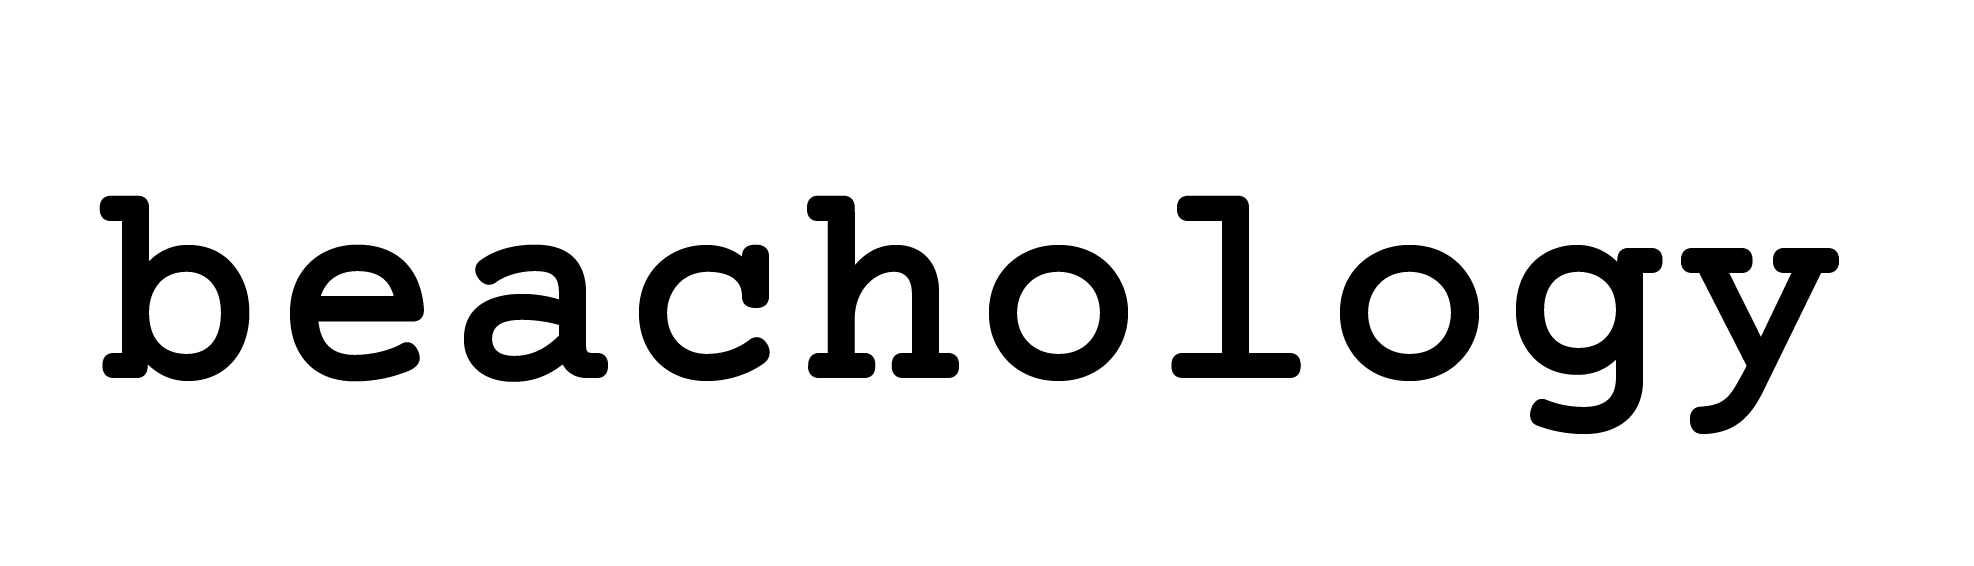 beachology store maine logo black